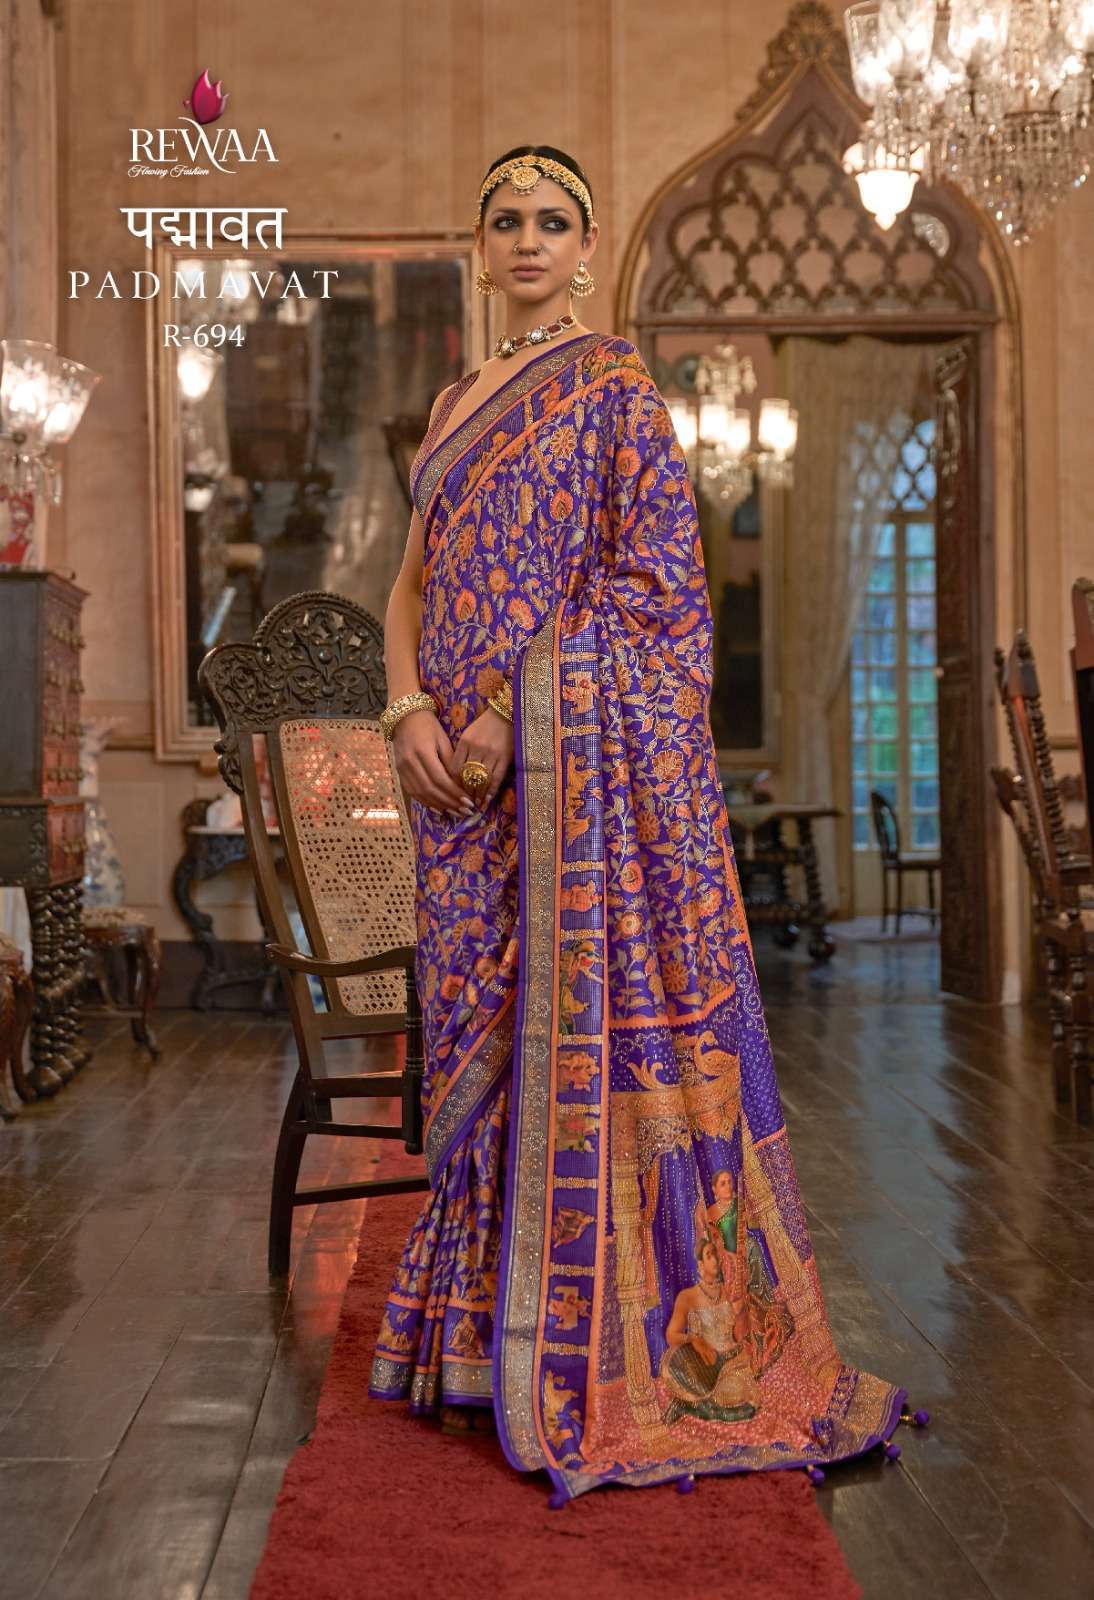 Rewaa fashion Padmawat Ikkat Patola design fancy look saree ...